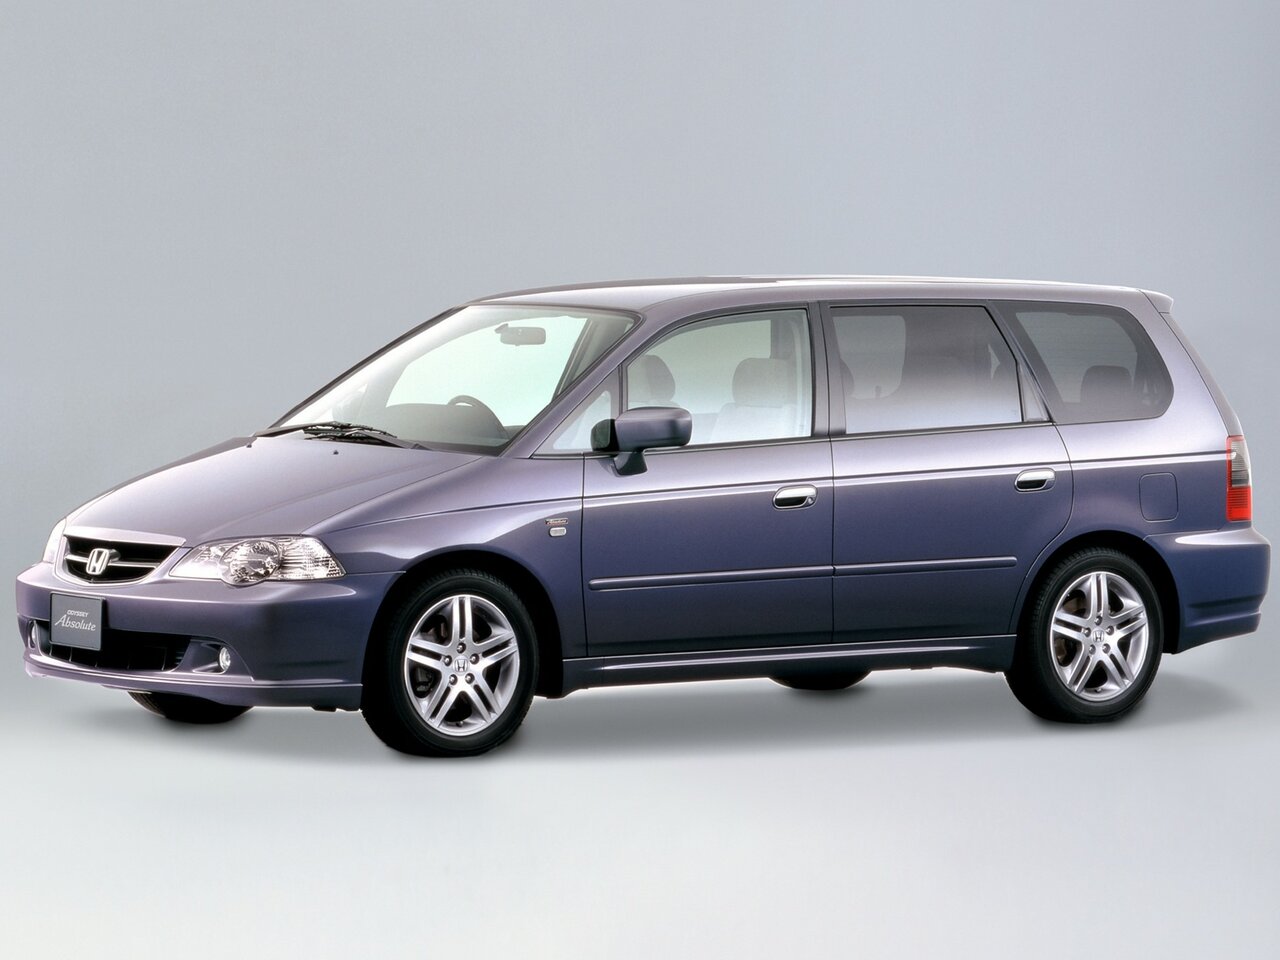 Honda Odyssey характеристики фотографии и обзор